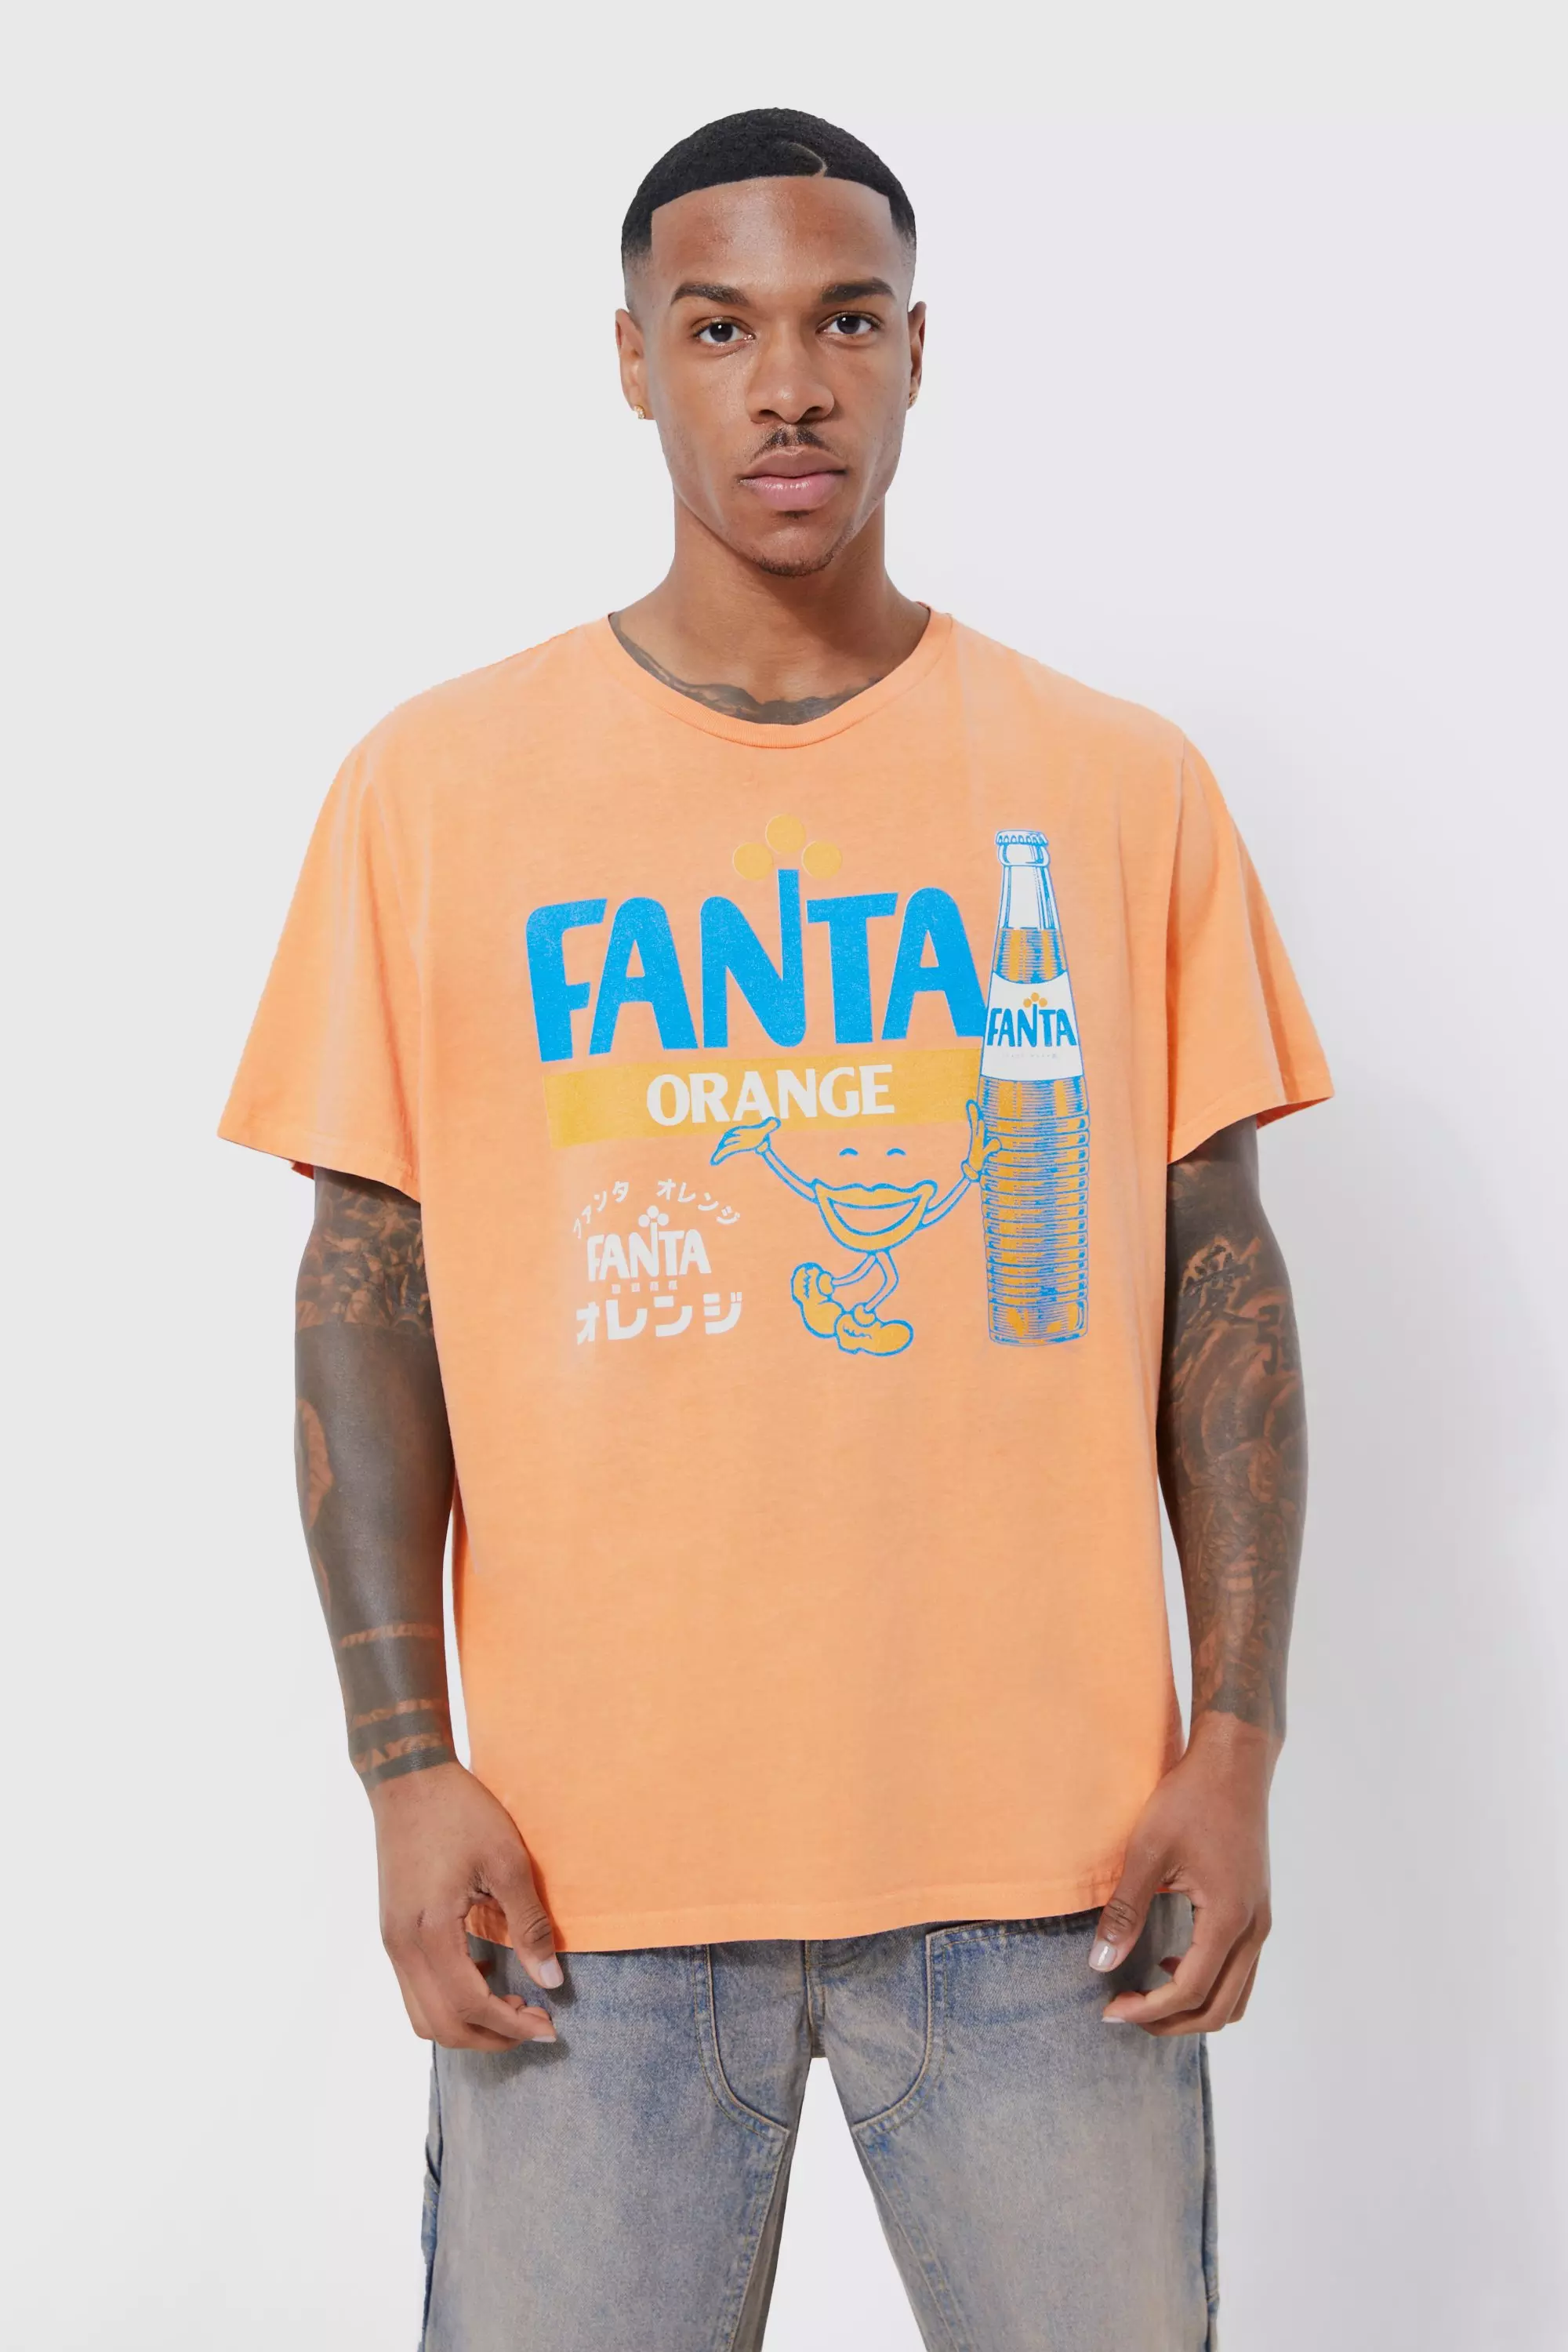 Orange Oversized Fanta Overdye License T-shirt